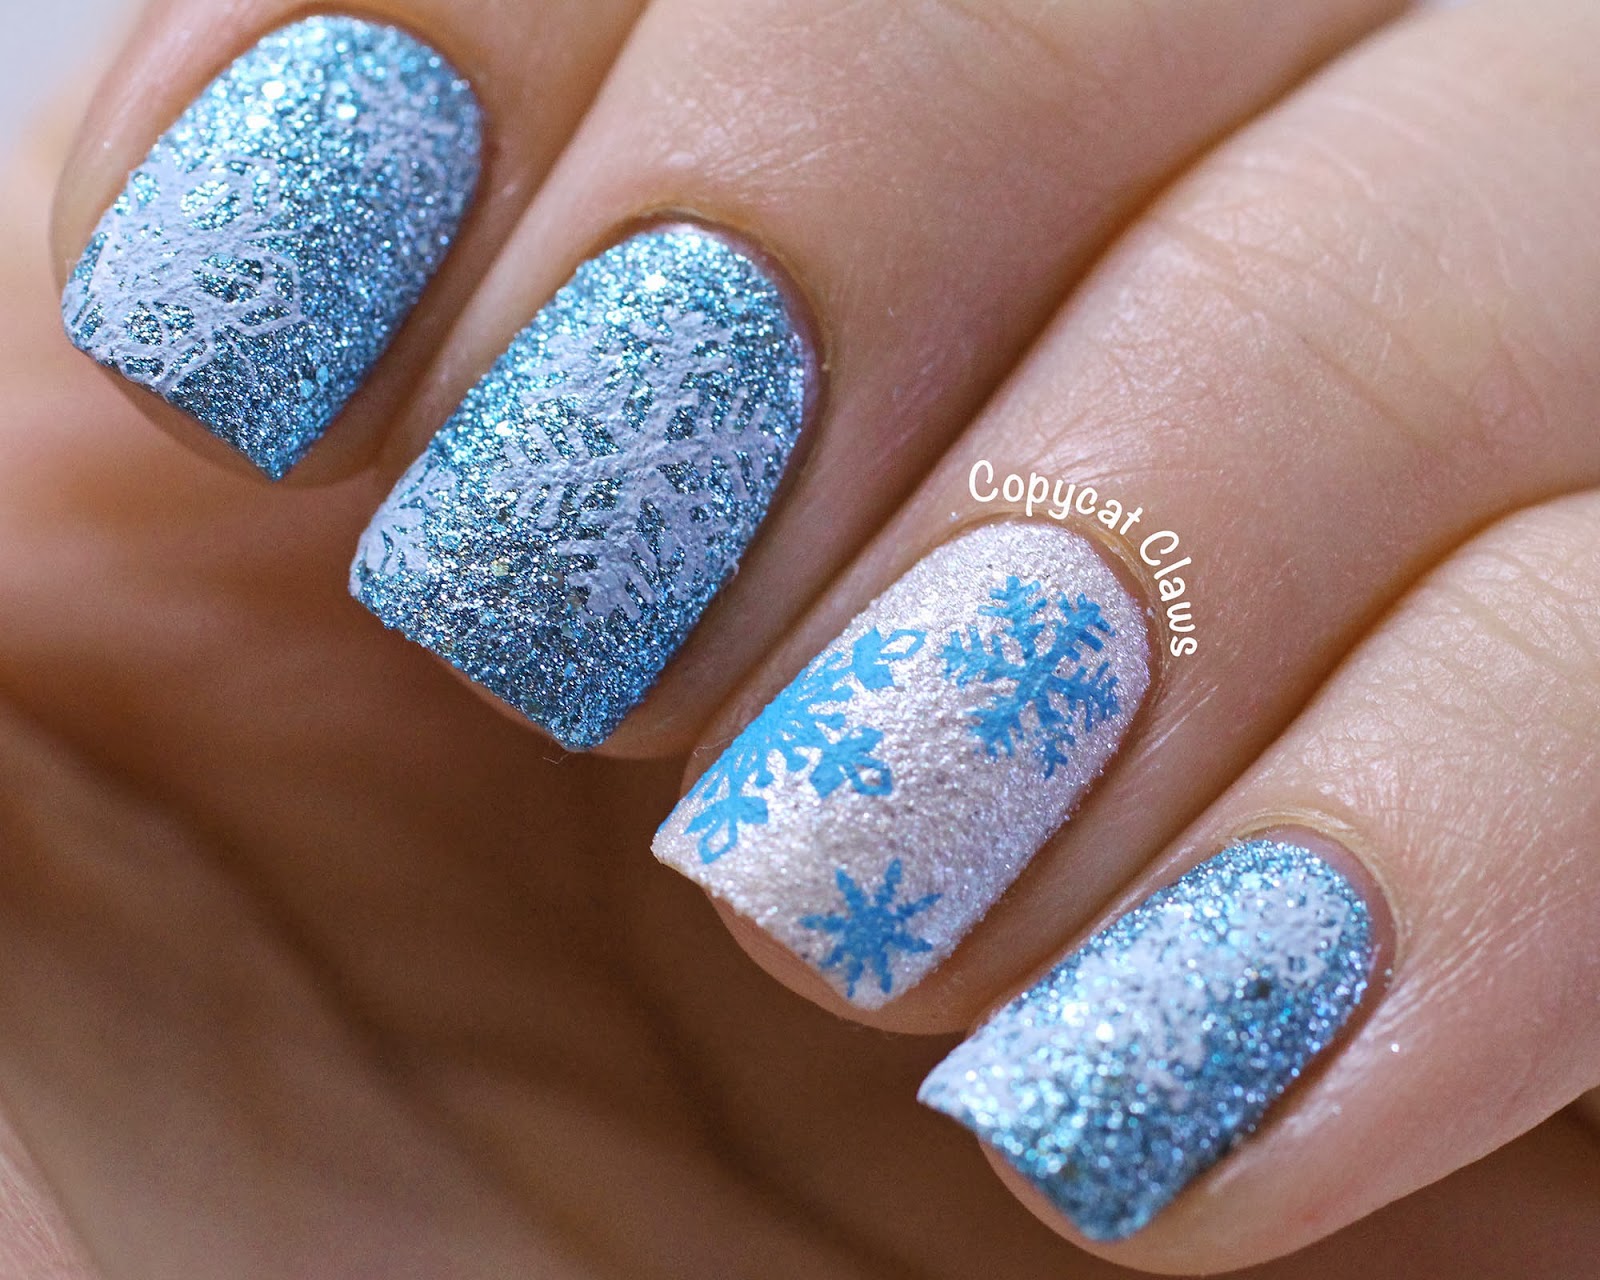 Copycat Claws: Textured Snowflake Nail Art